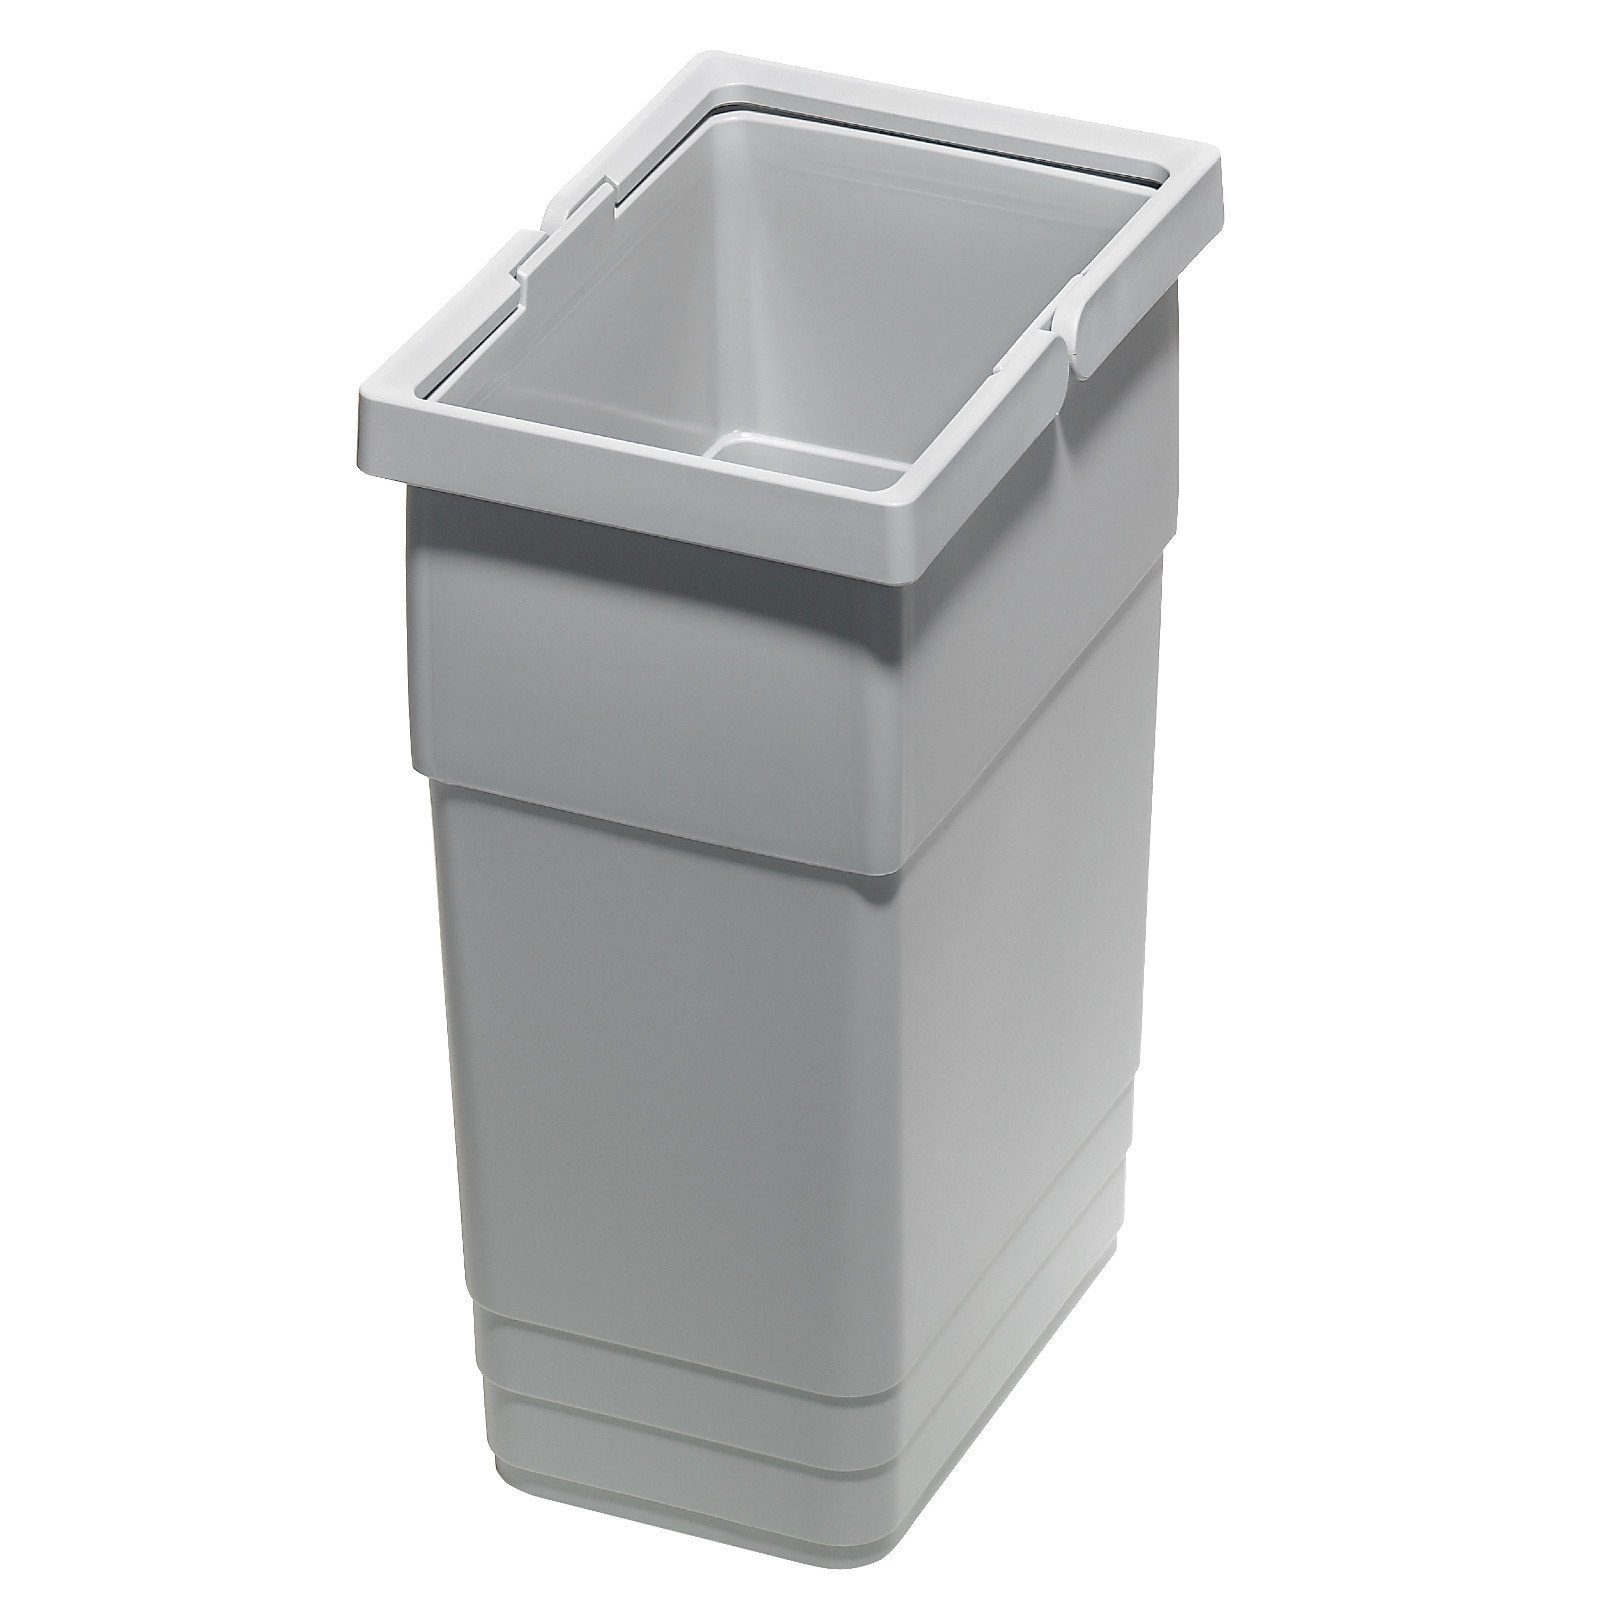 SO-TECH® Mülltrennsystem Abfallsammler Abfalleimer 5135.11 für Abfalltrennsystem eins2vier